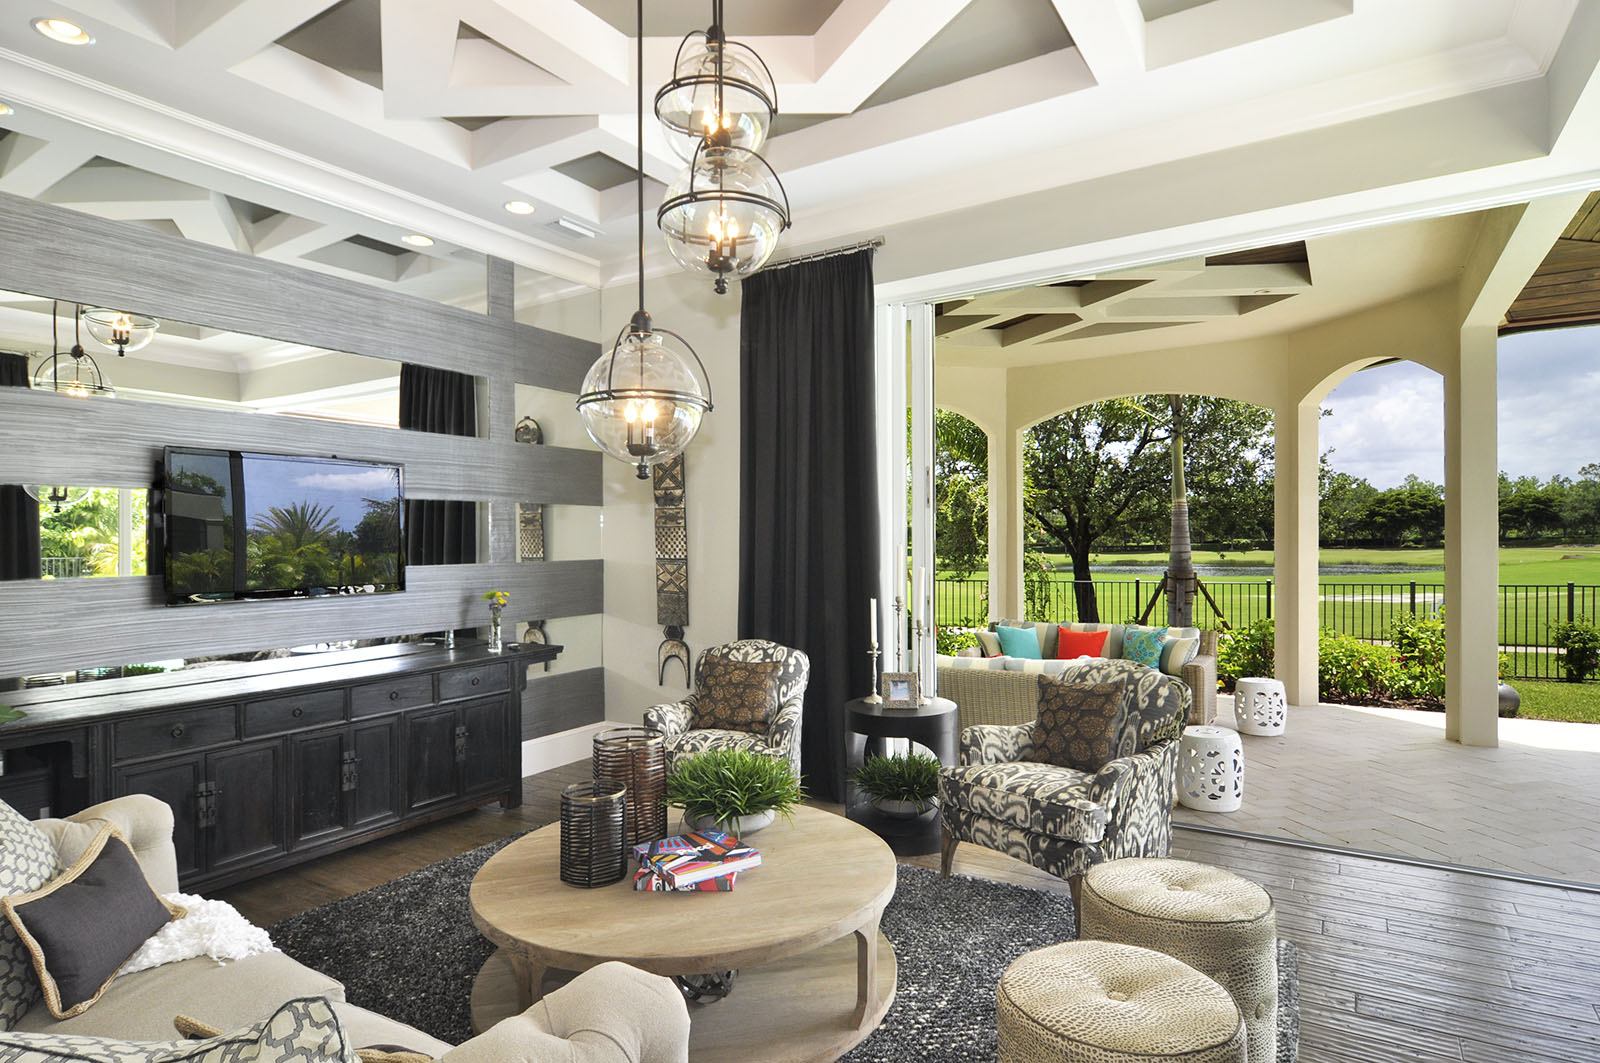 Iron Star Luxury Homes’ La Villa Sul Verde under contract at Talis Park